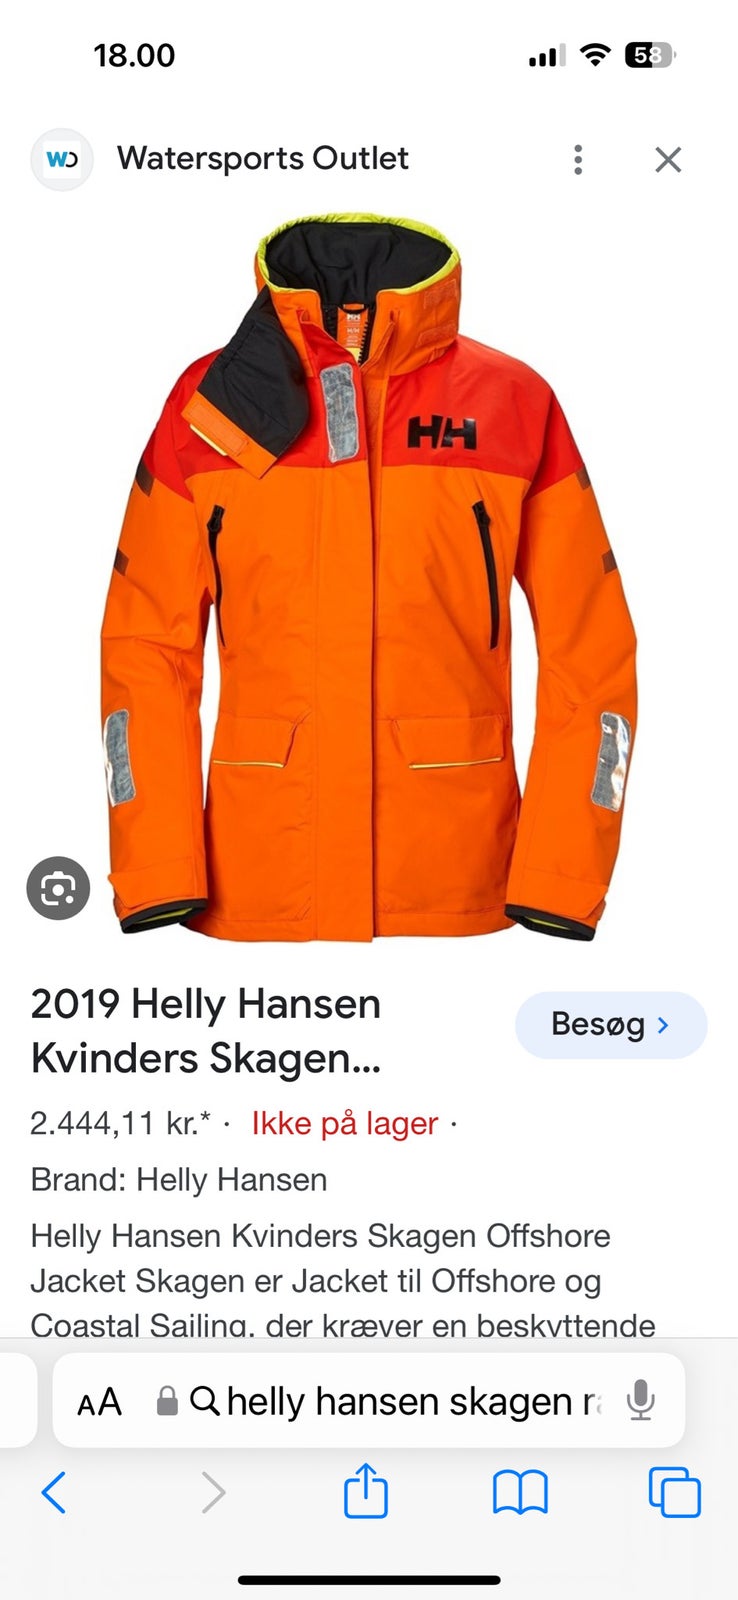 Helly Hansen Skagen off Shore jakke
Str small
H...